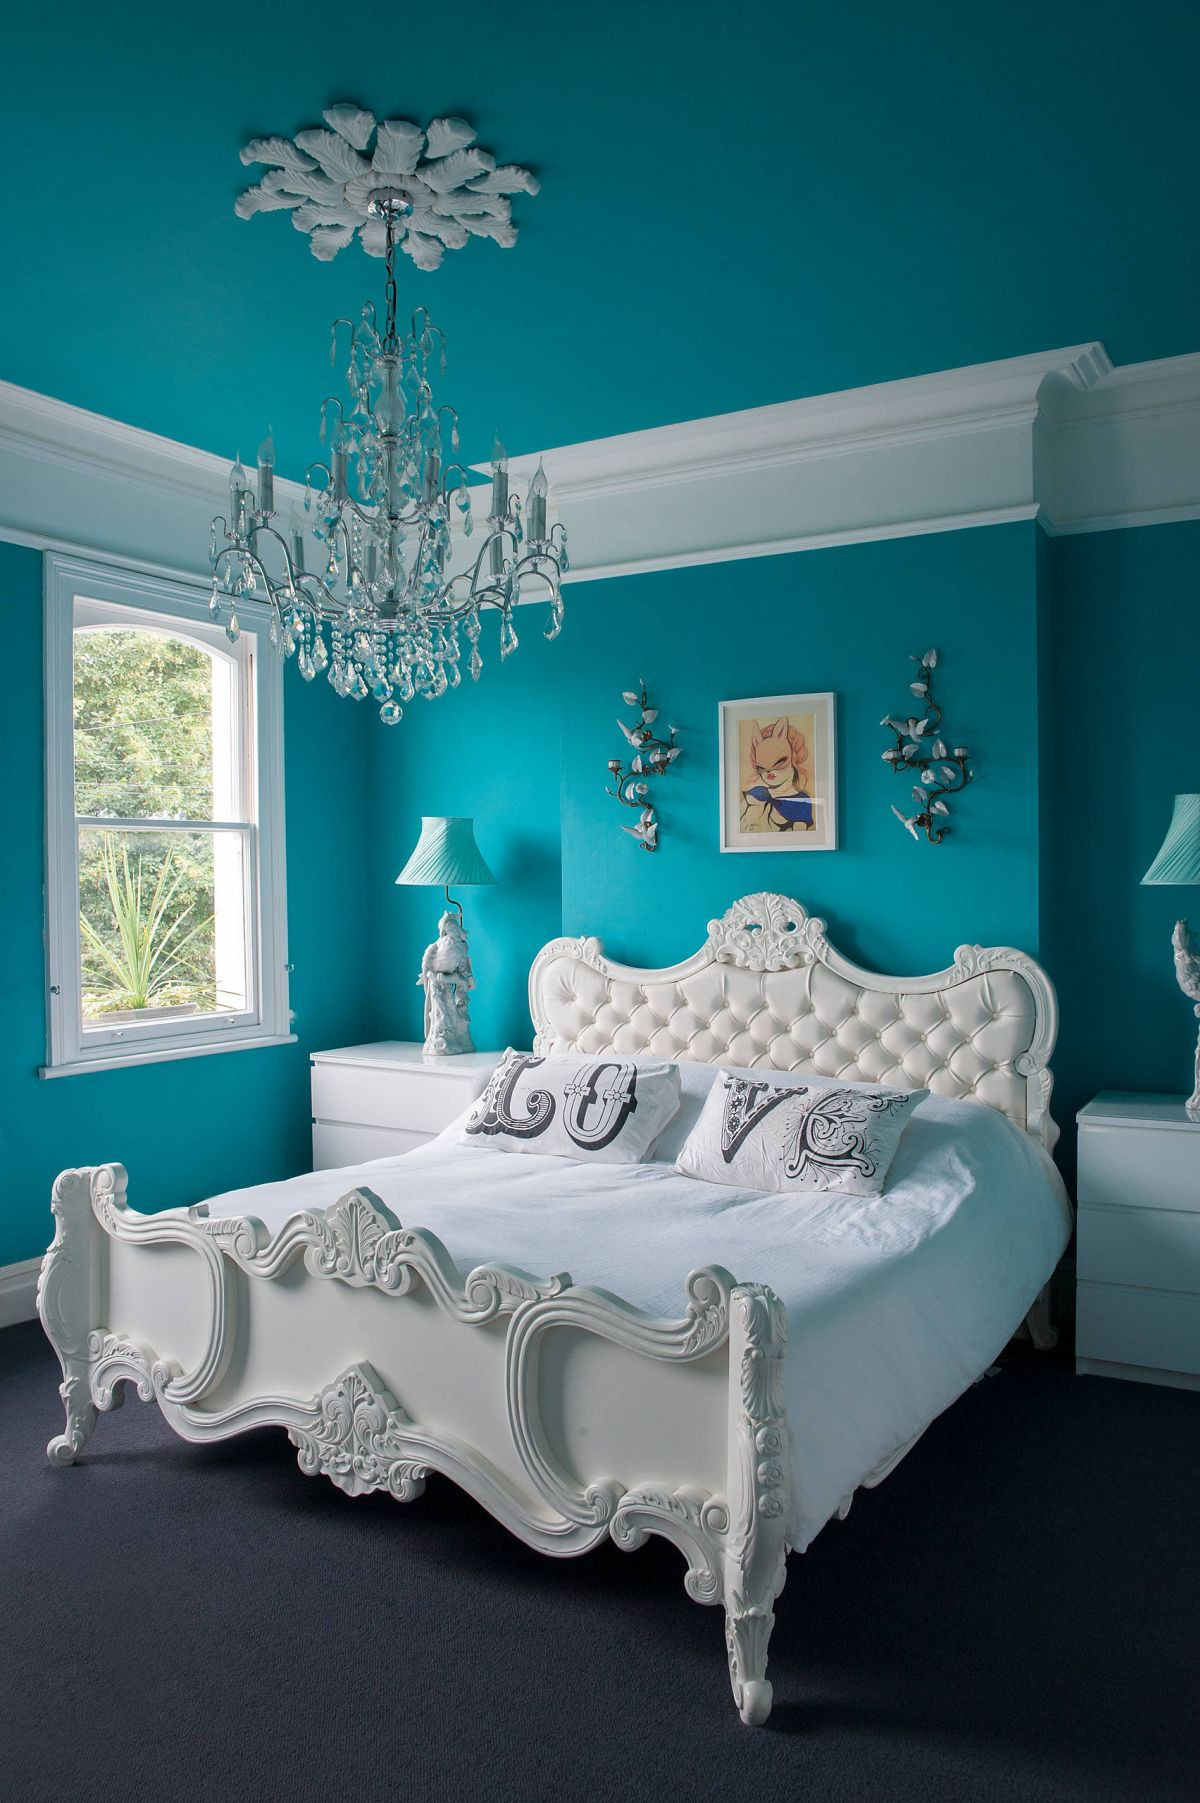 Bedroom Paint Color
 The Four Best Paint Colors For Bedrooms